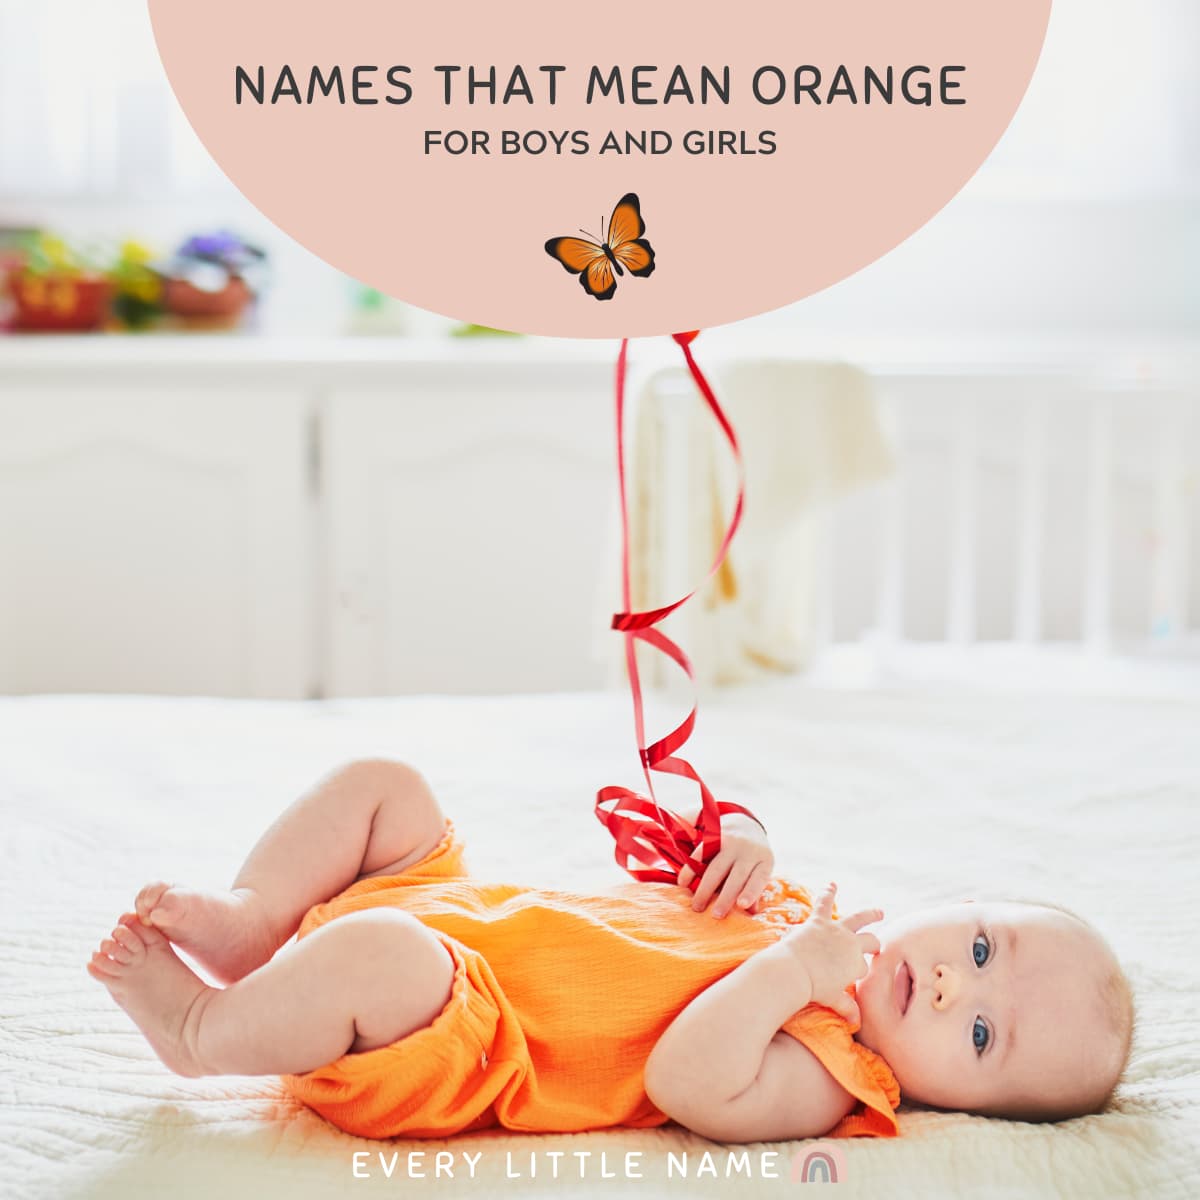 Baby wearing an orange romper and holding an orange balloon.